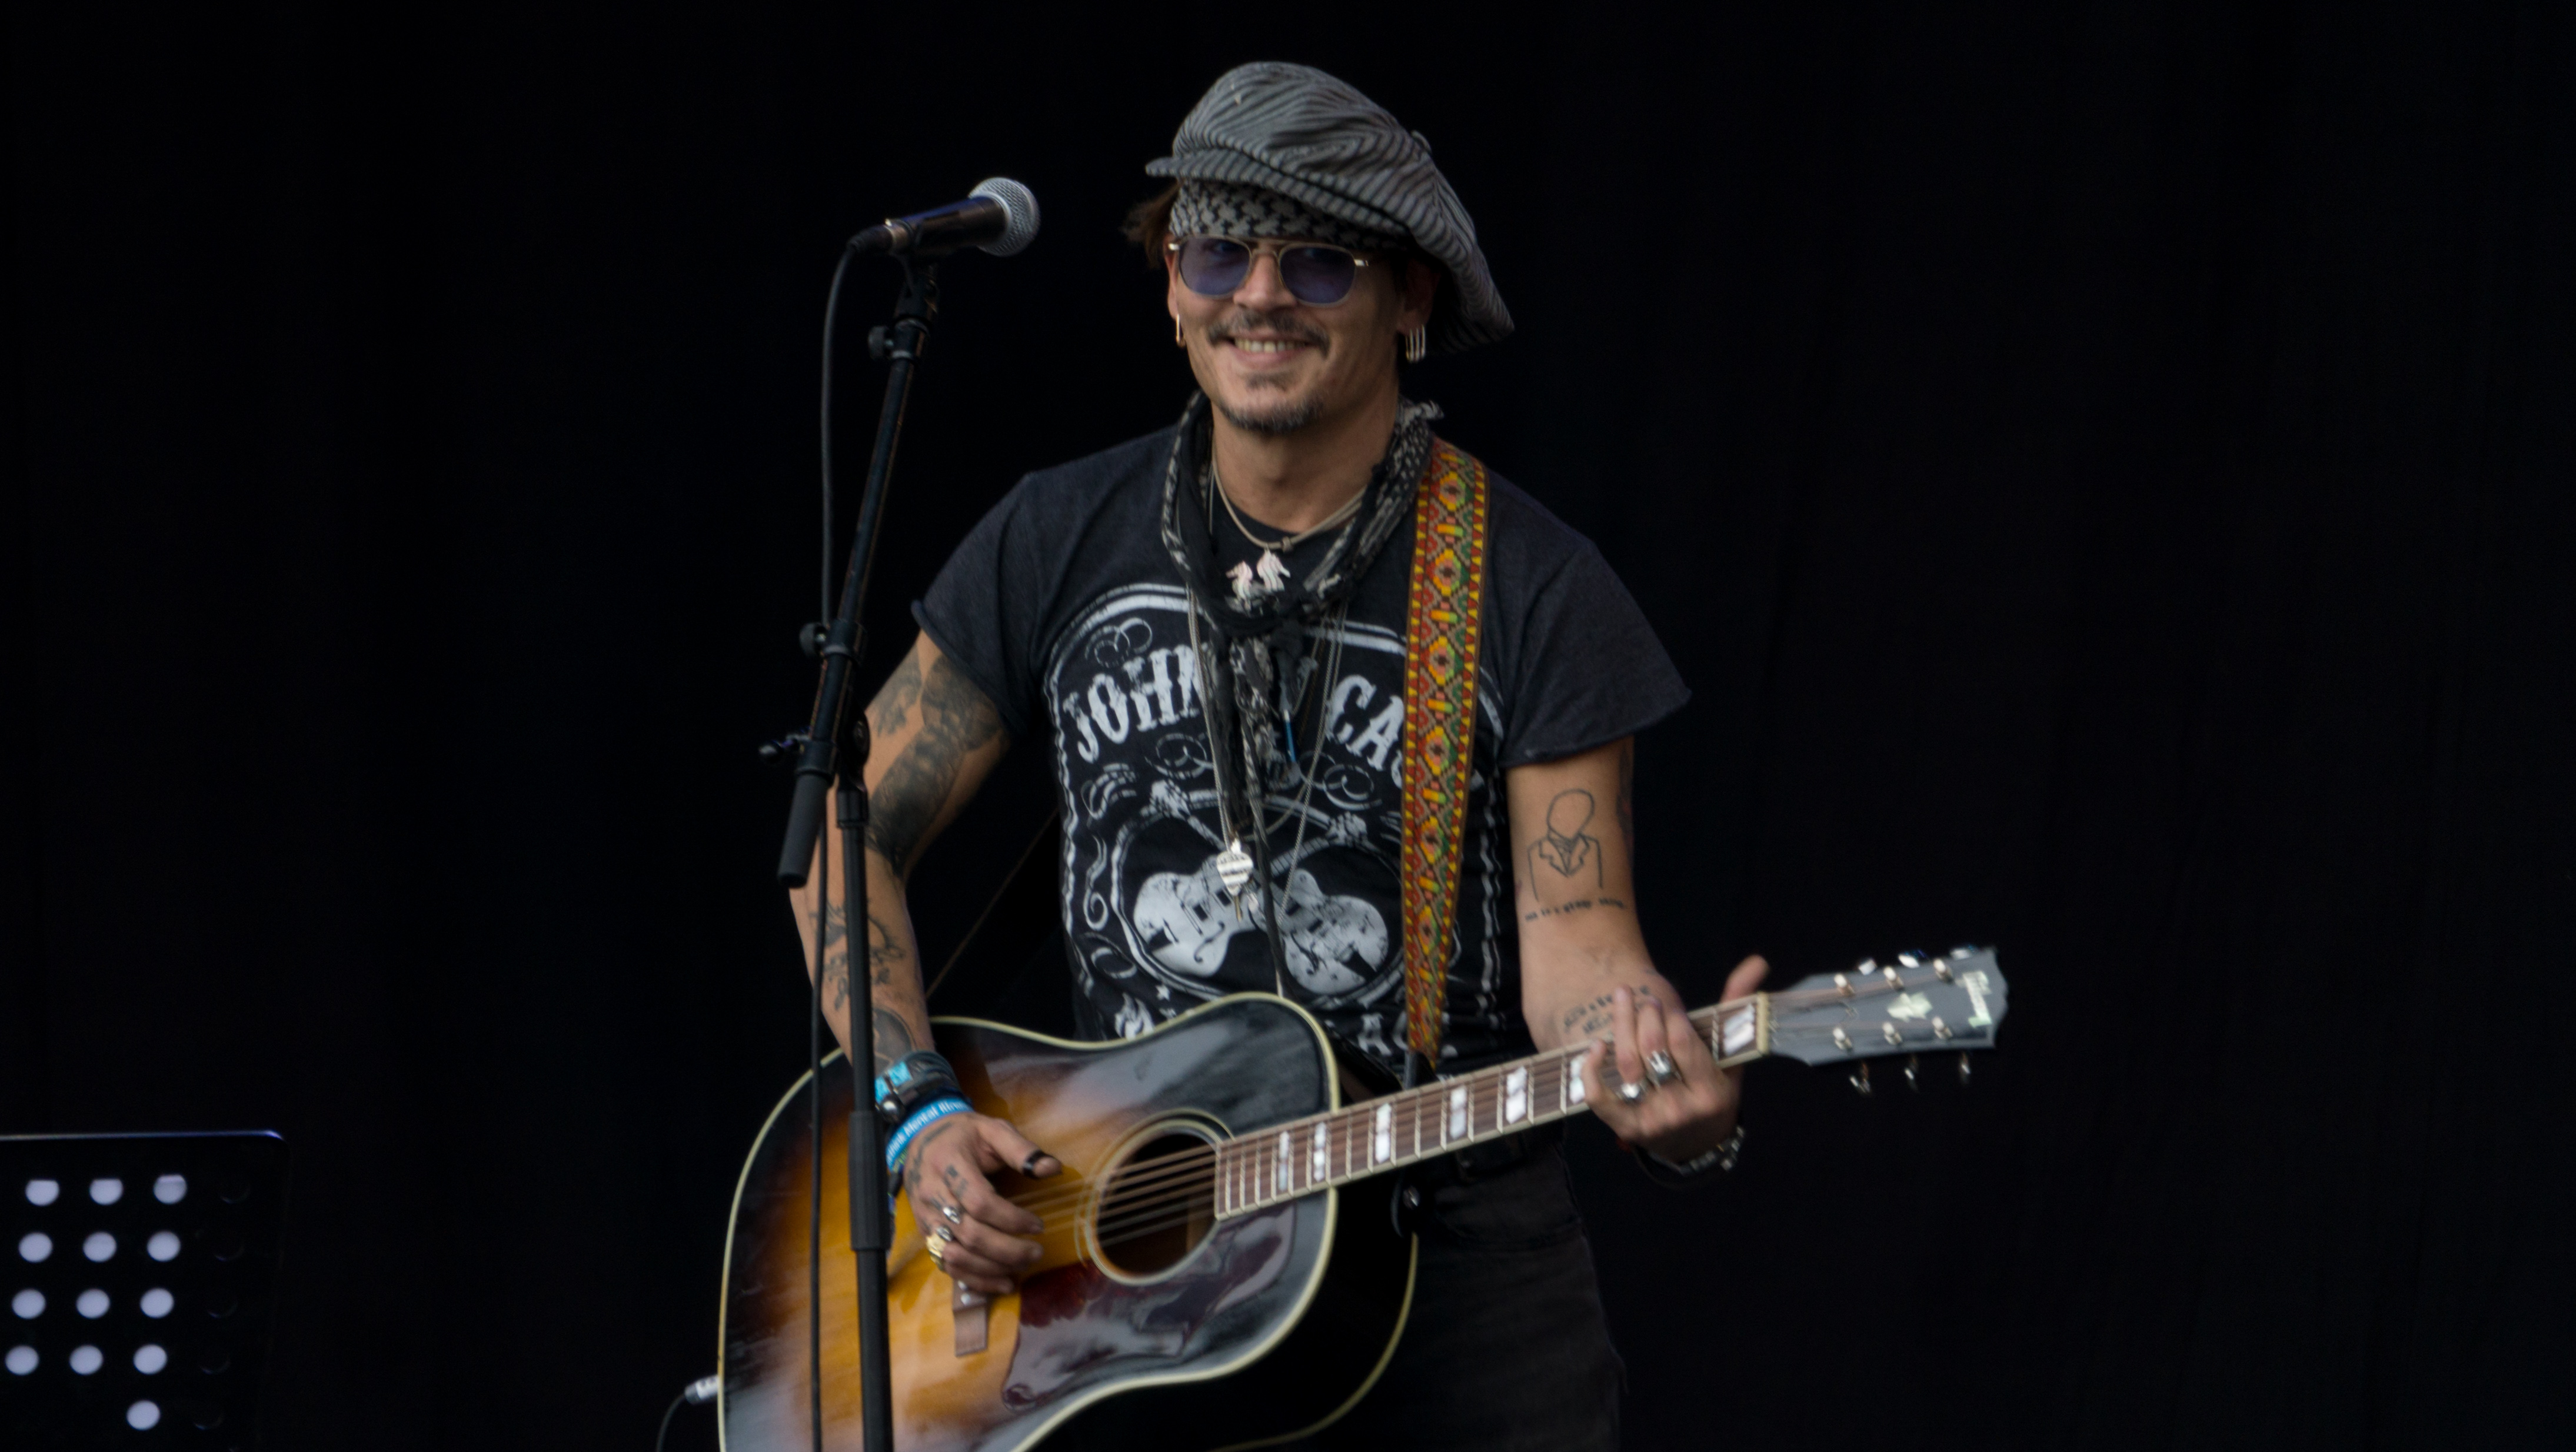 Johnny Depp arrives in Denmark in late June